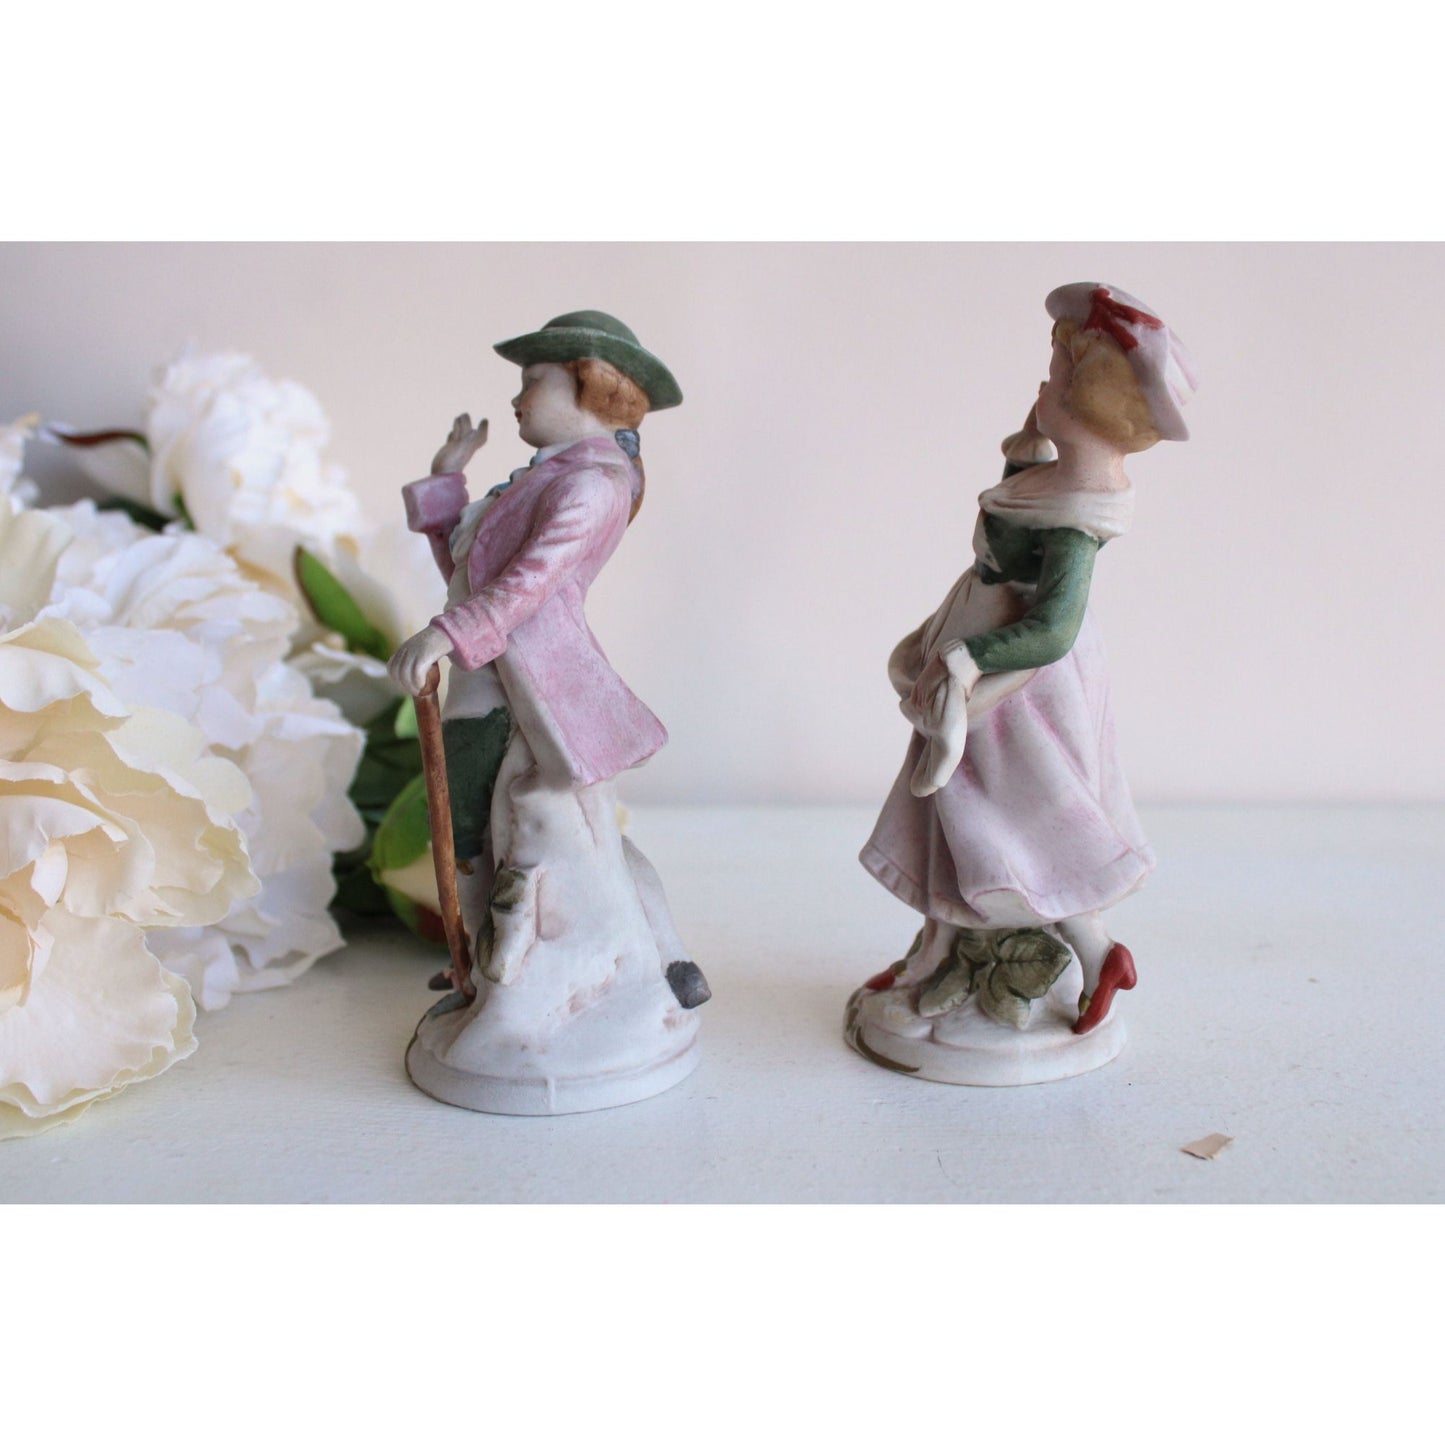 Vintage Bisque Porcelain Man and Woman Figurines